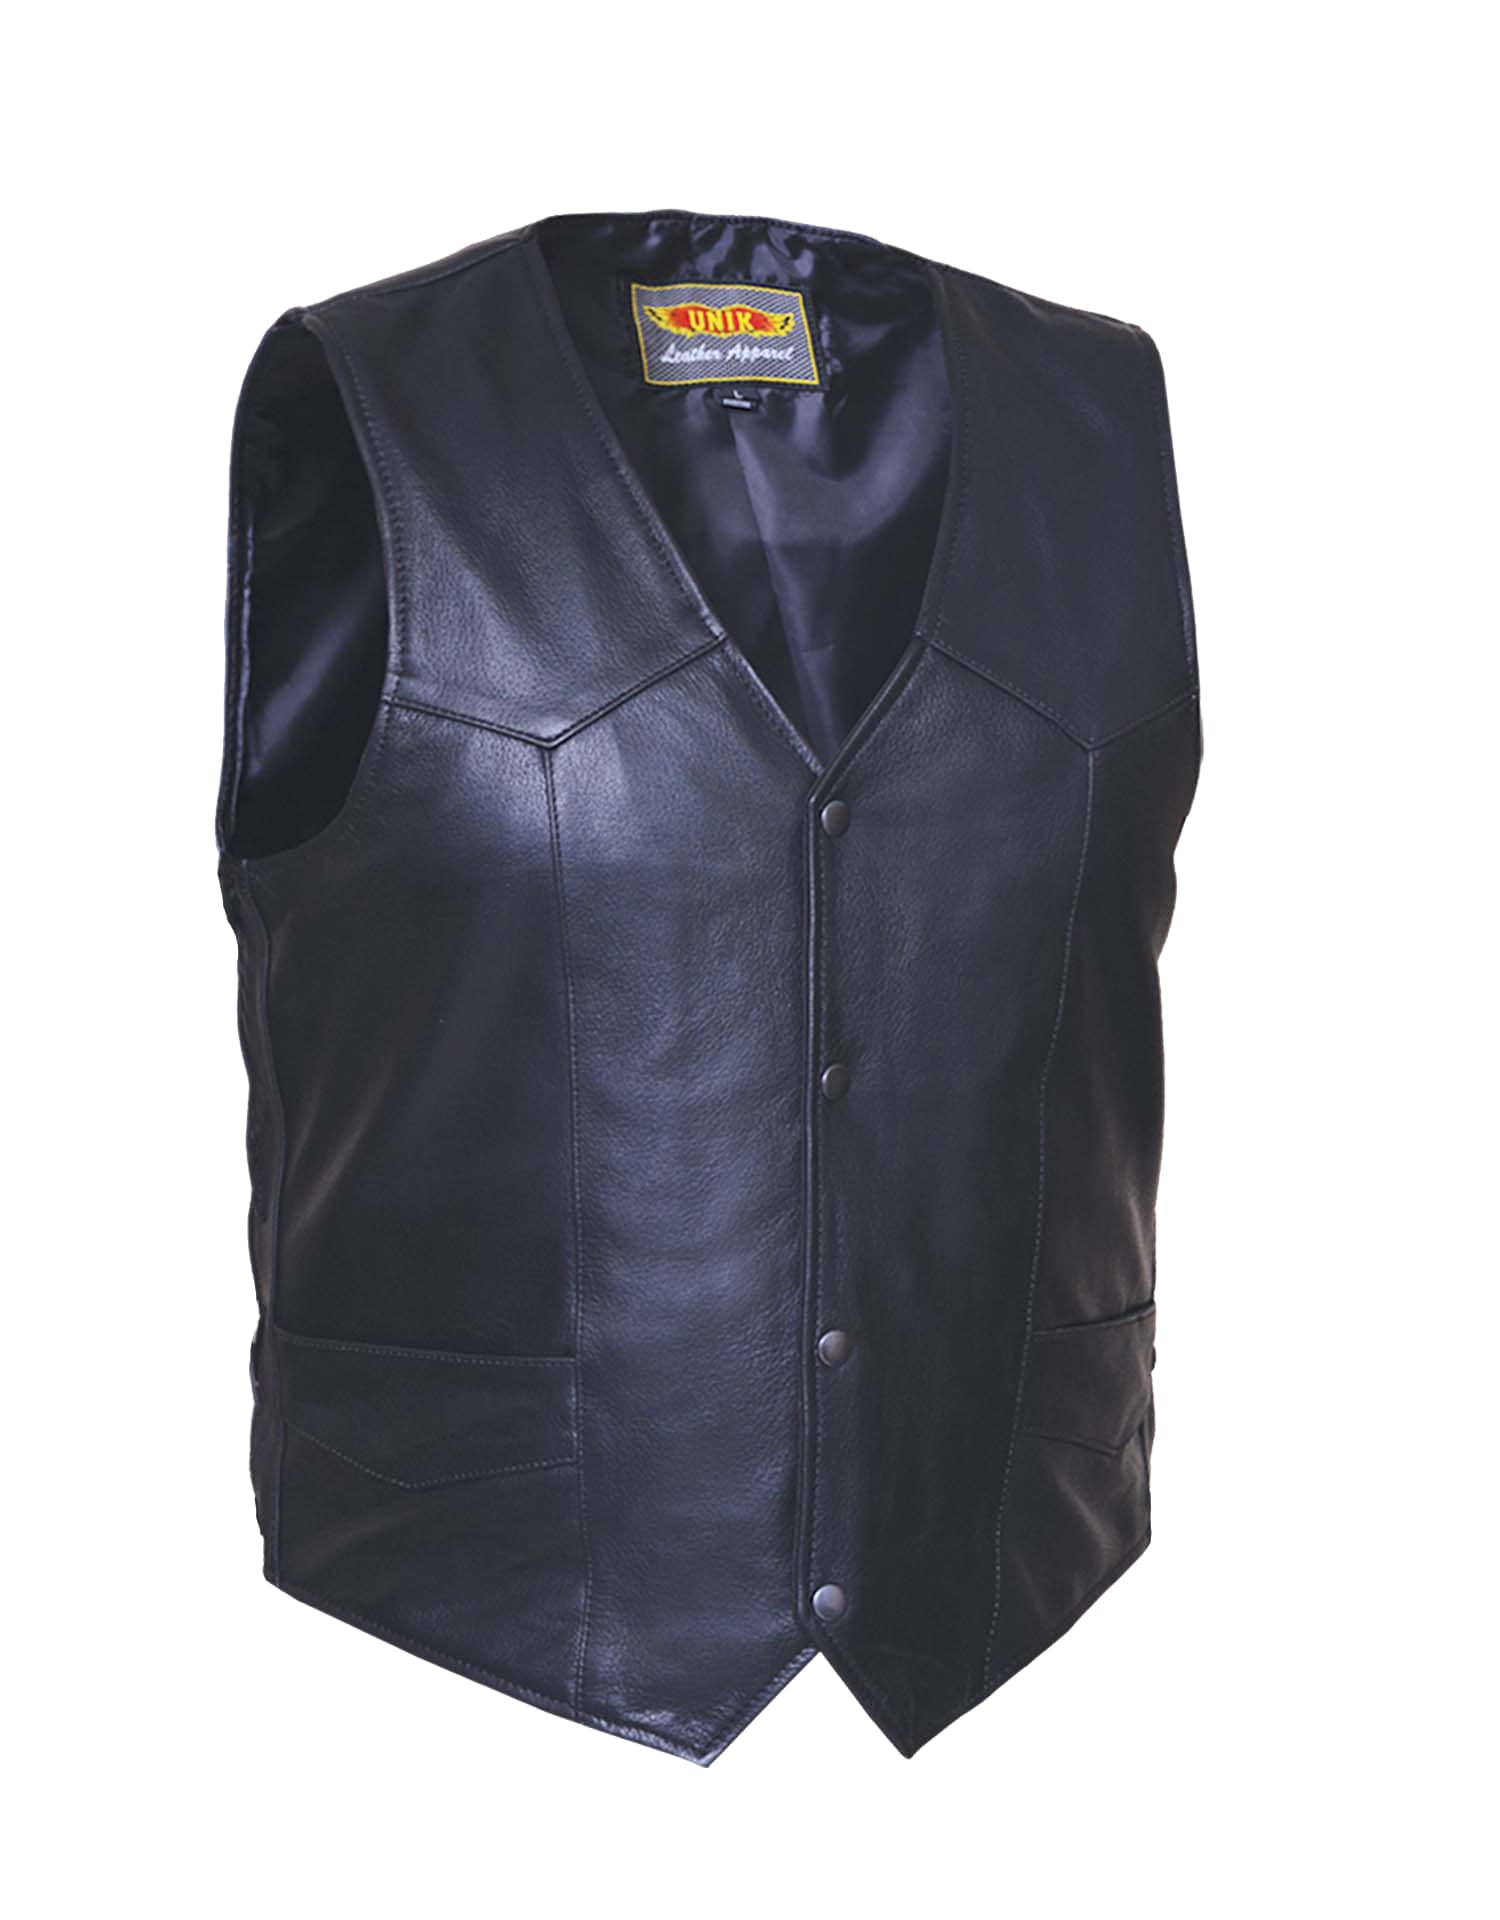 Tall Men's Premium Leather Plain side Motorcycle Vest